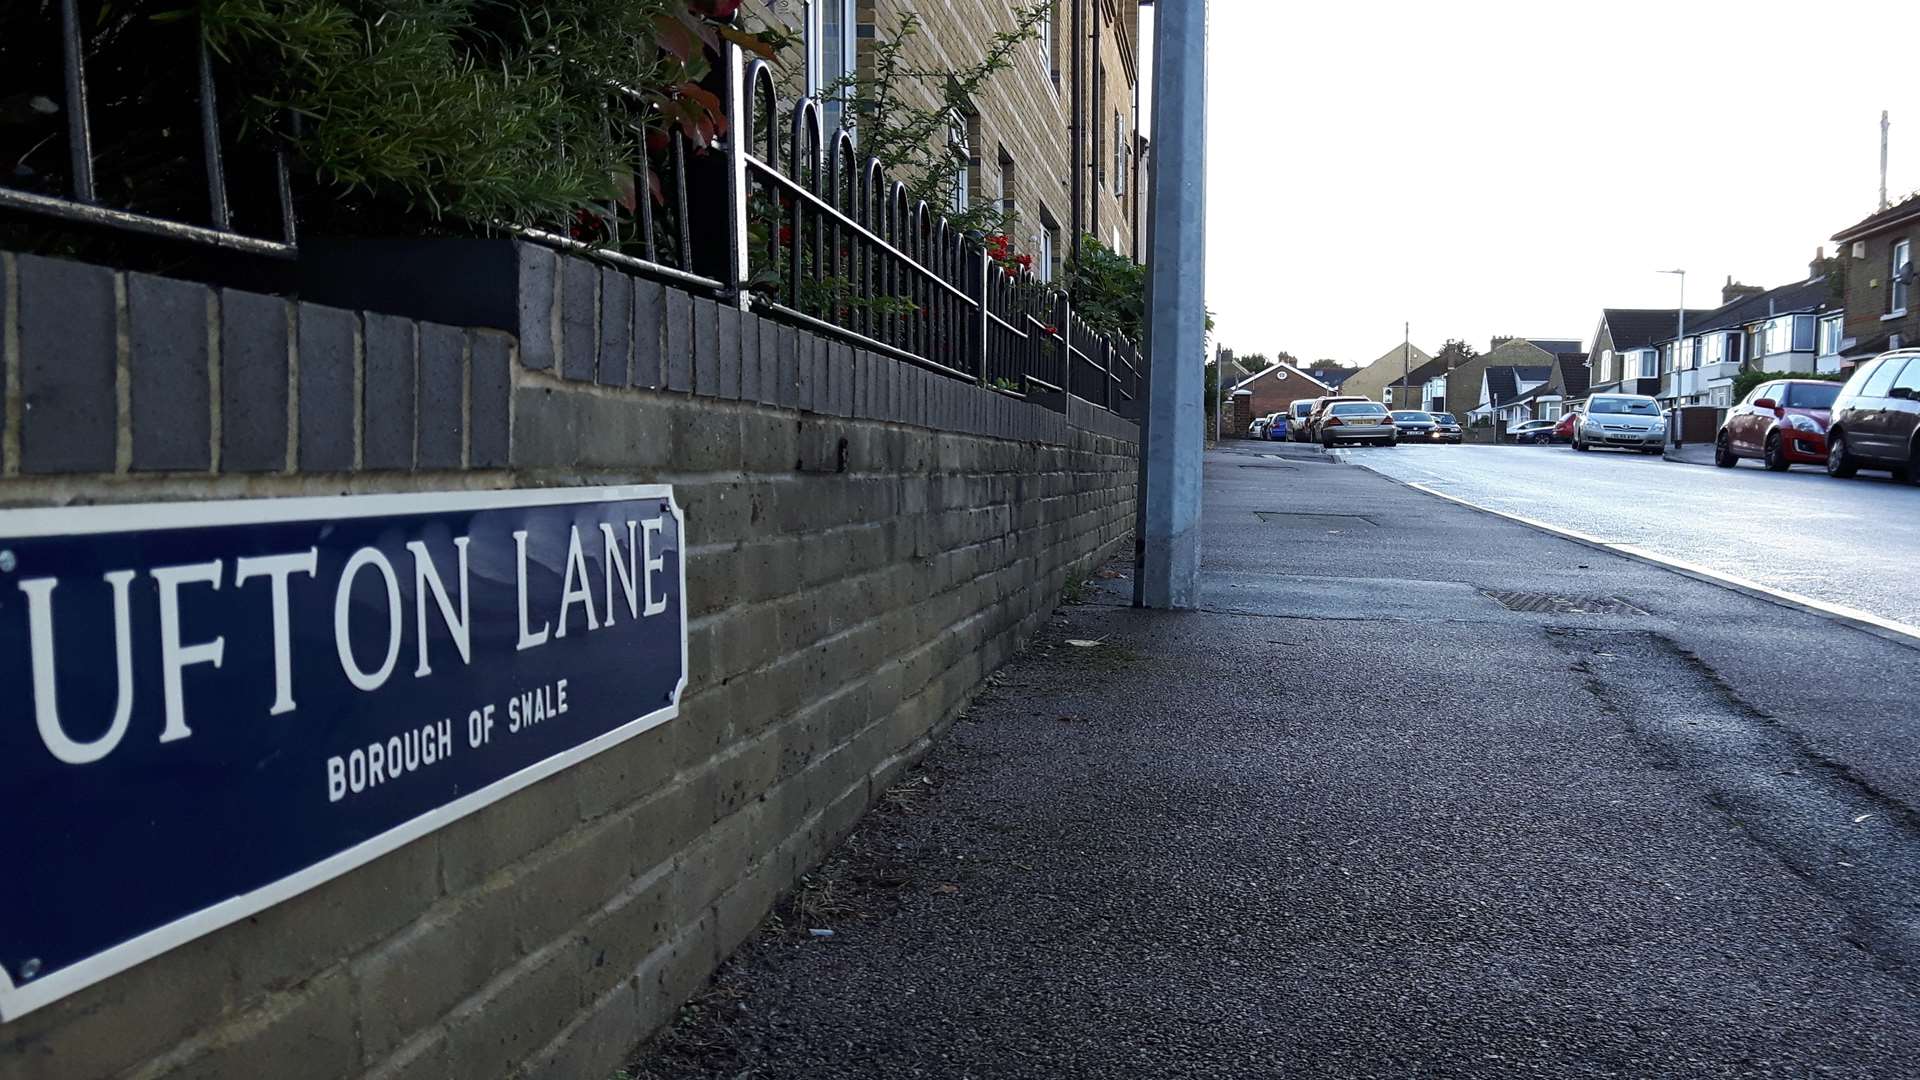 Ufton Lane, Sittingbourne, where the woman was mugged